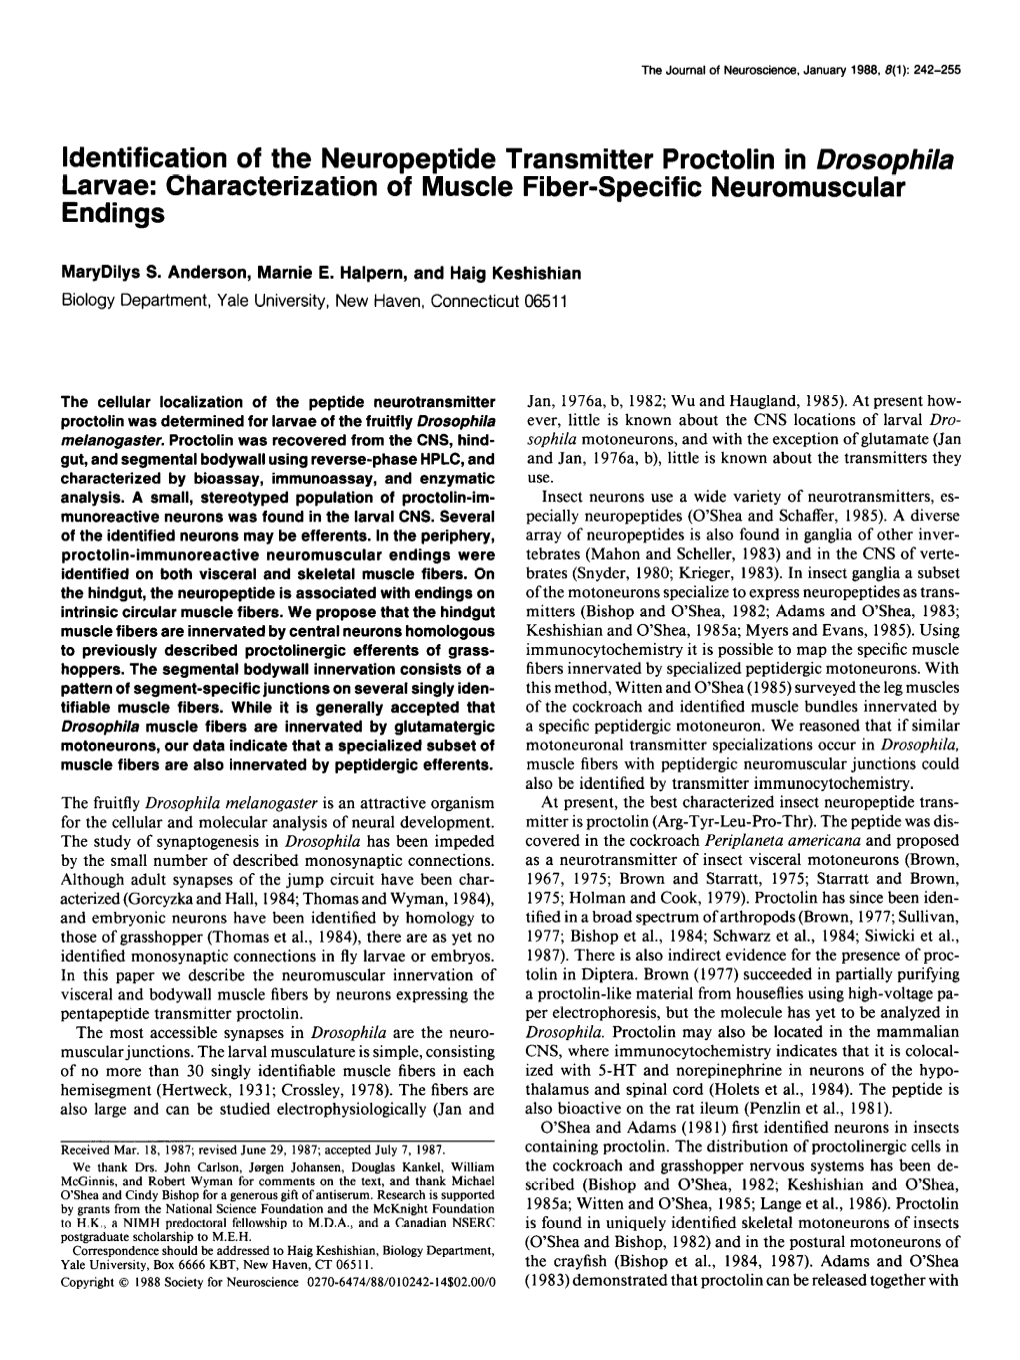 Identification of the Neuropeptide Transmitter Proctolin in Drosophila Larvae: Characterization of Muscle Fiber-Specific Neuromuscular Endings